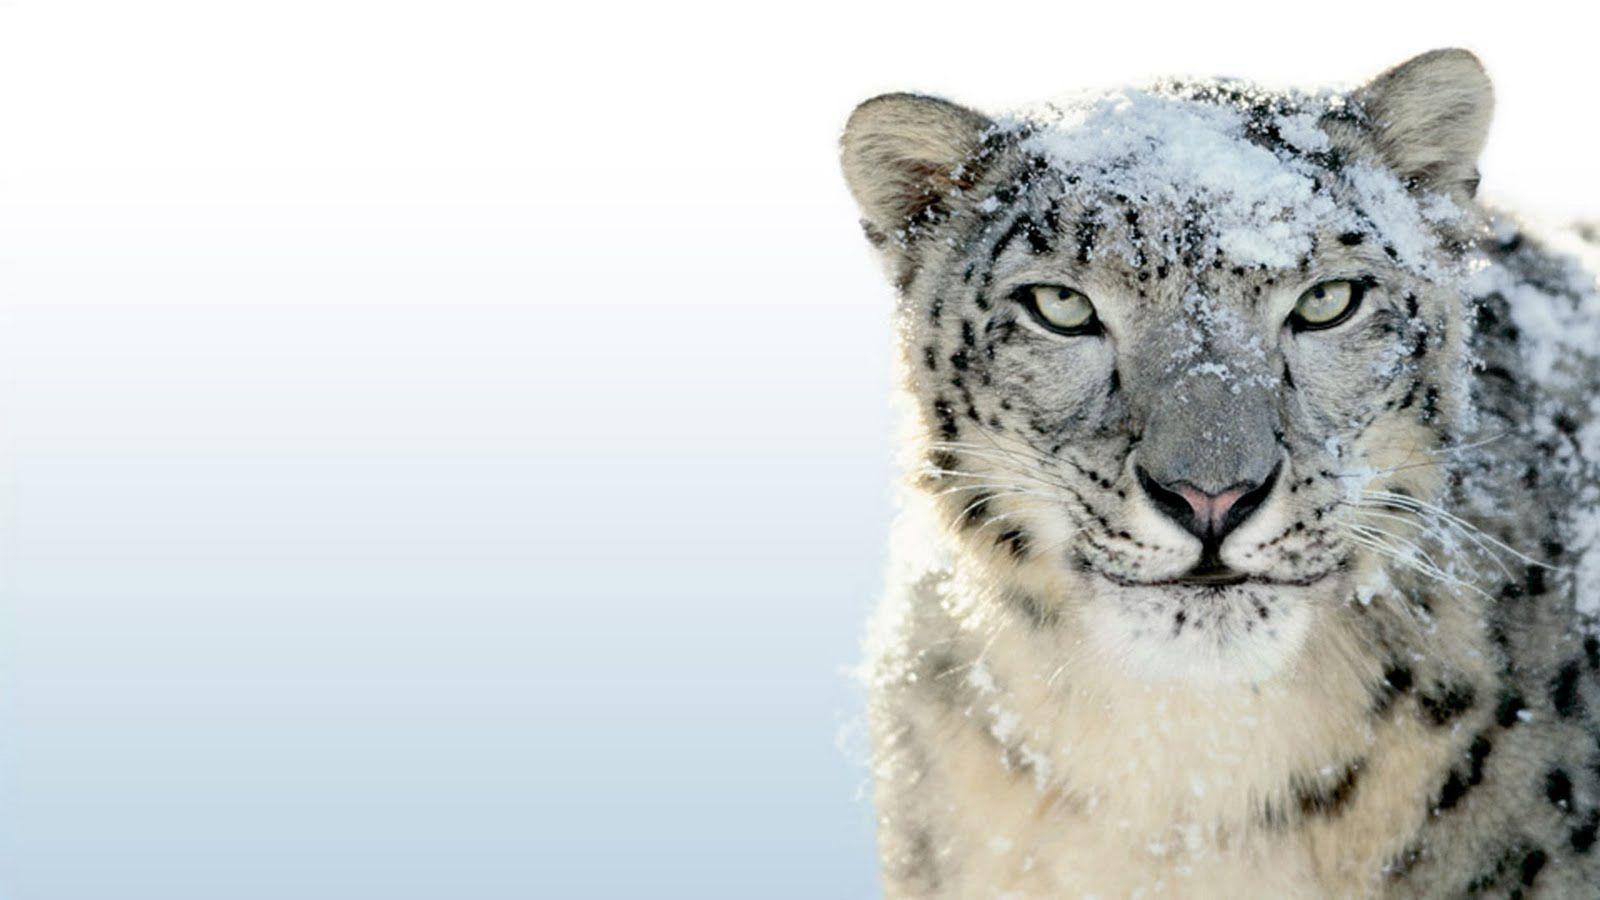 ps2 emulator snow leopard mac free download